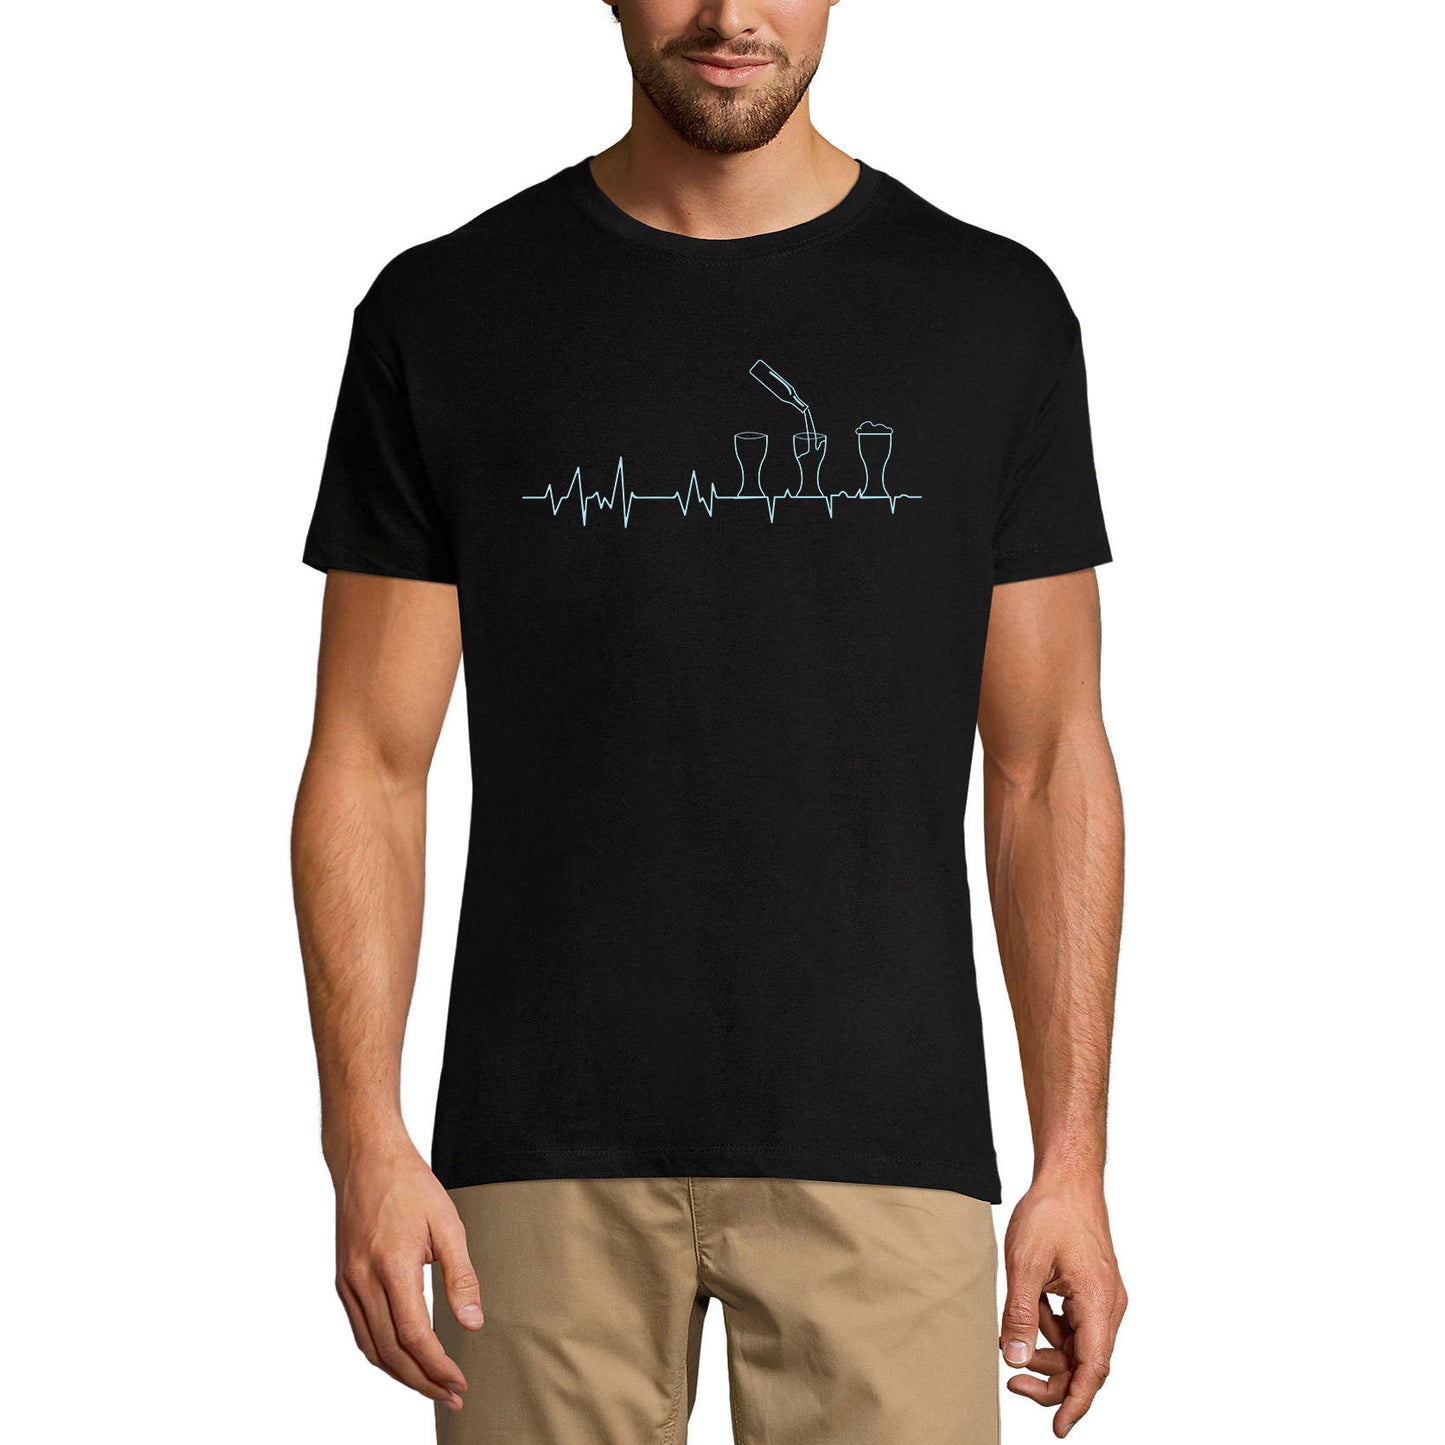 ULTRABASIC Men's T-Shirt Beer Heartbeat - Funny Humor Beer Lover Tee Shirt